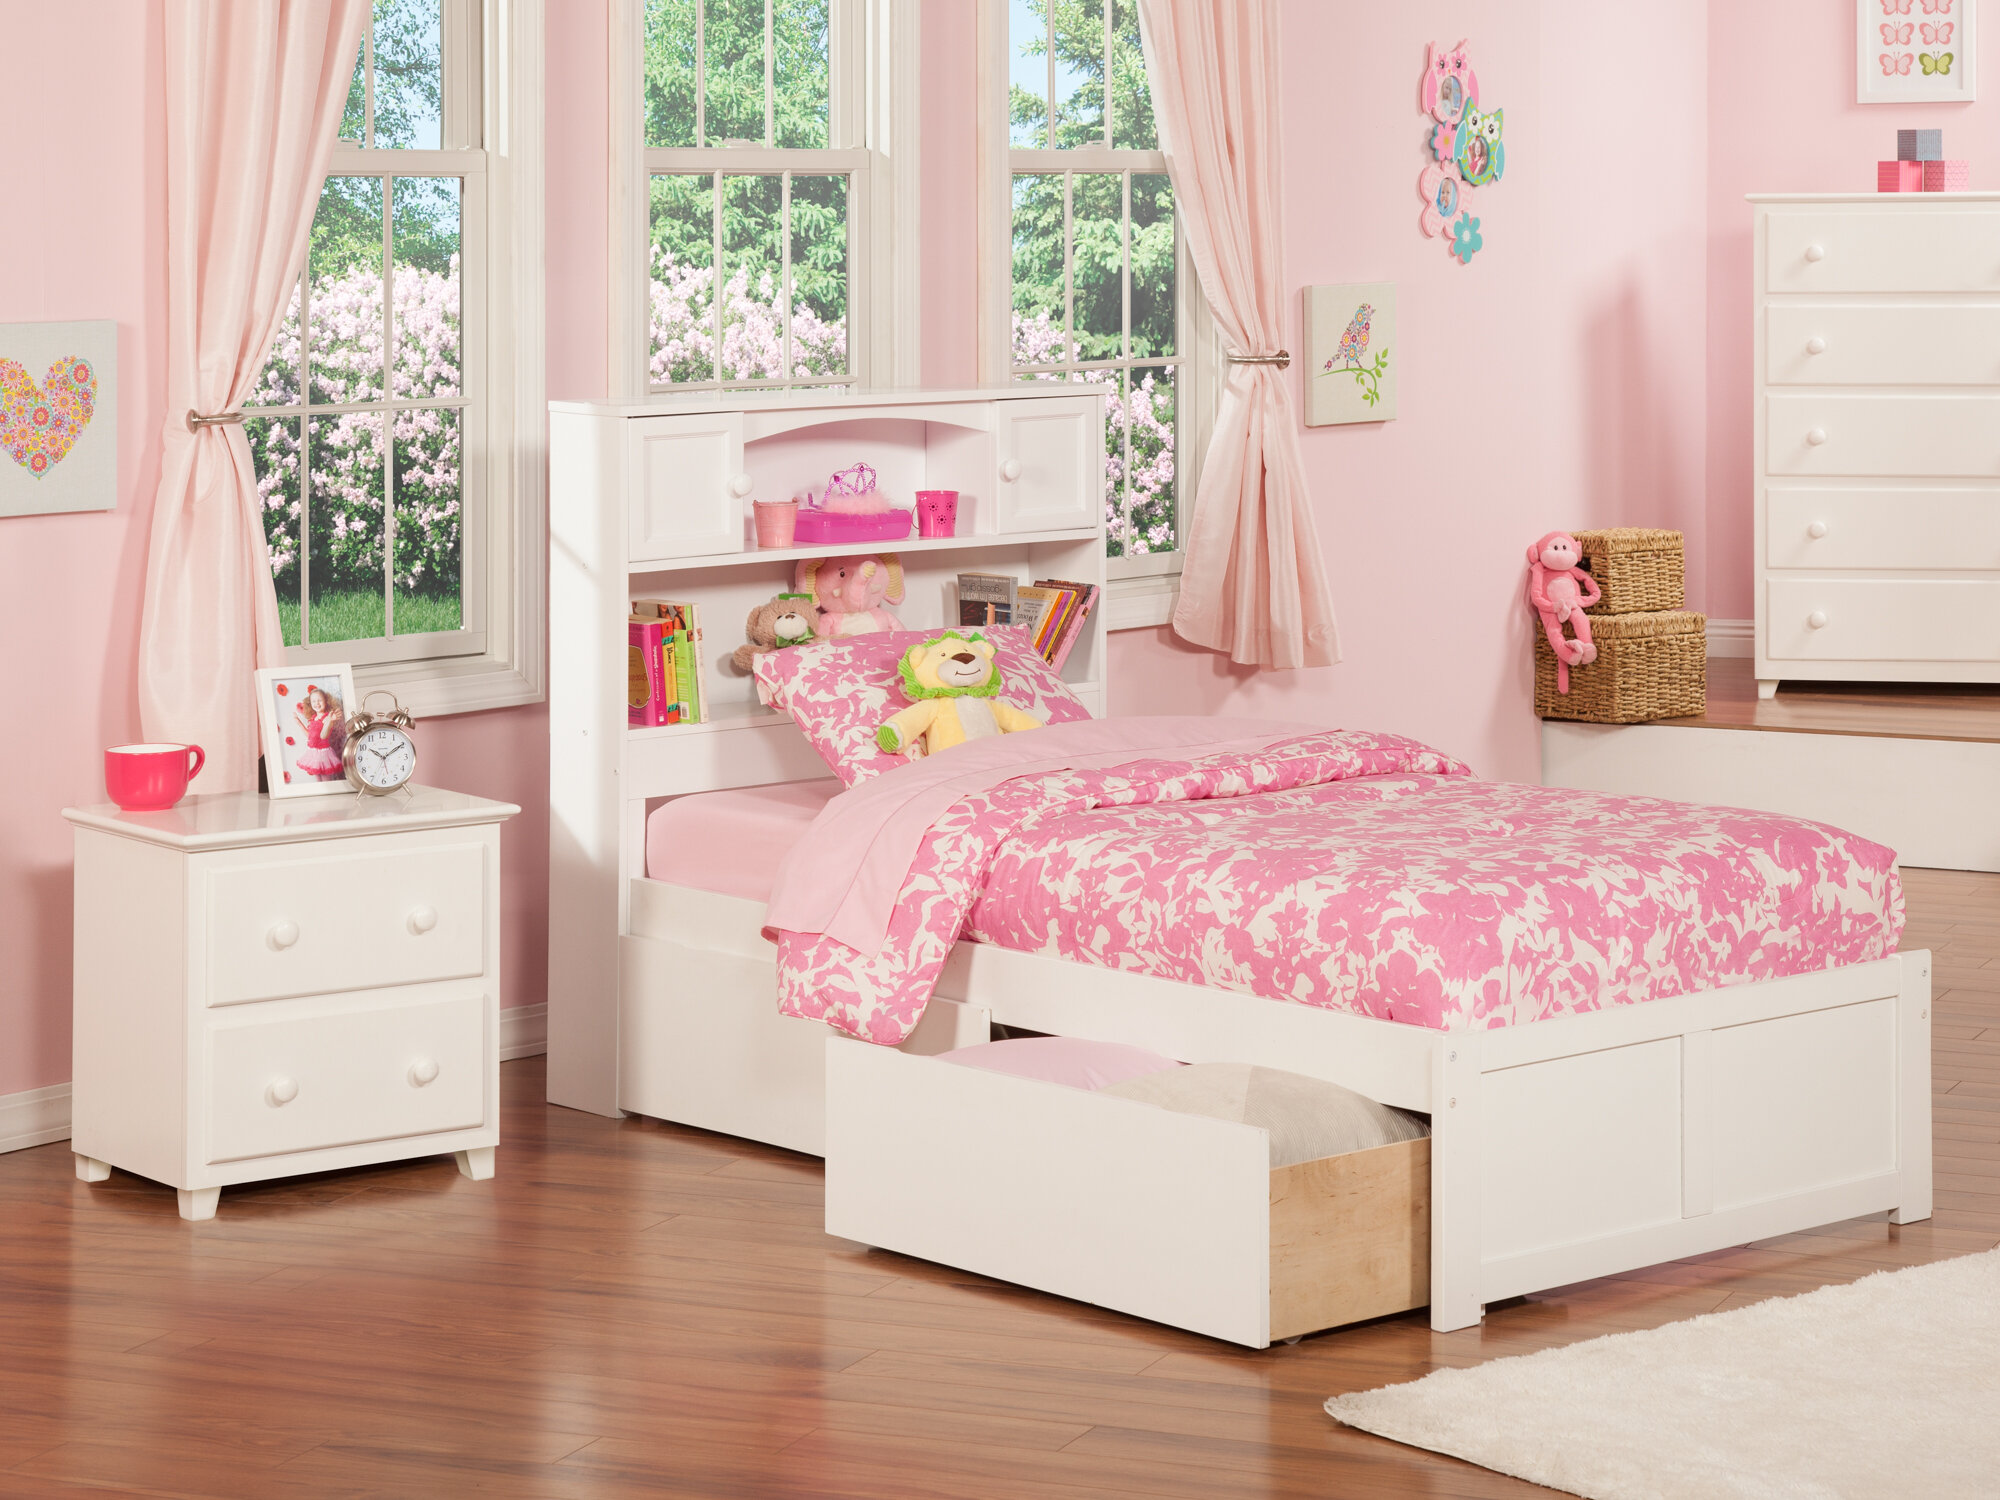 cute childrens bedroom furniture